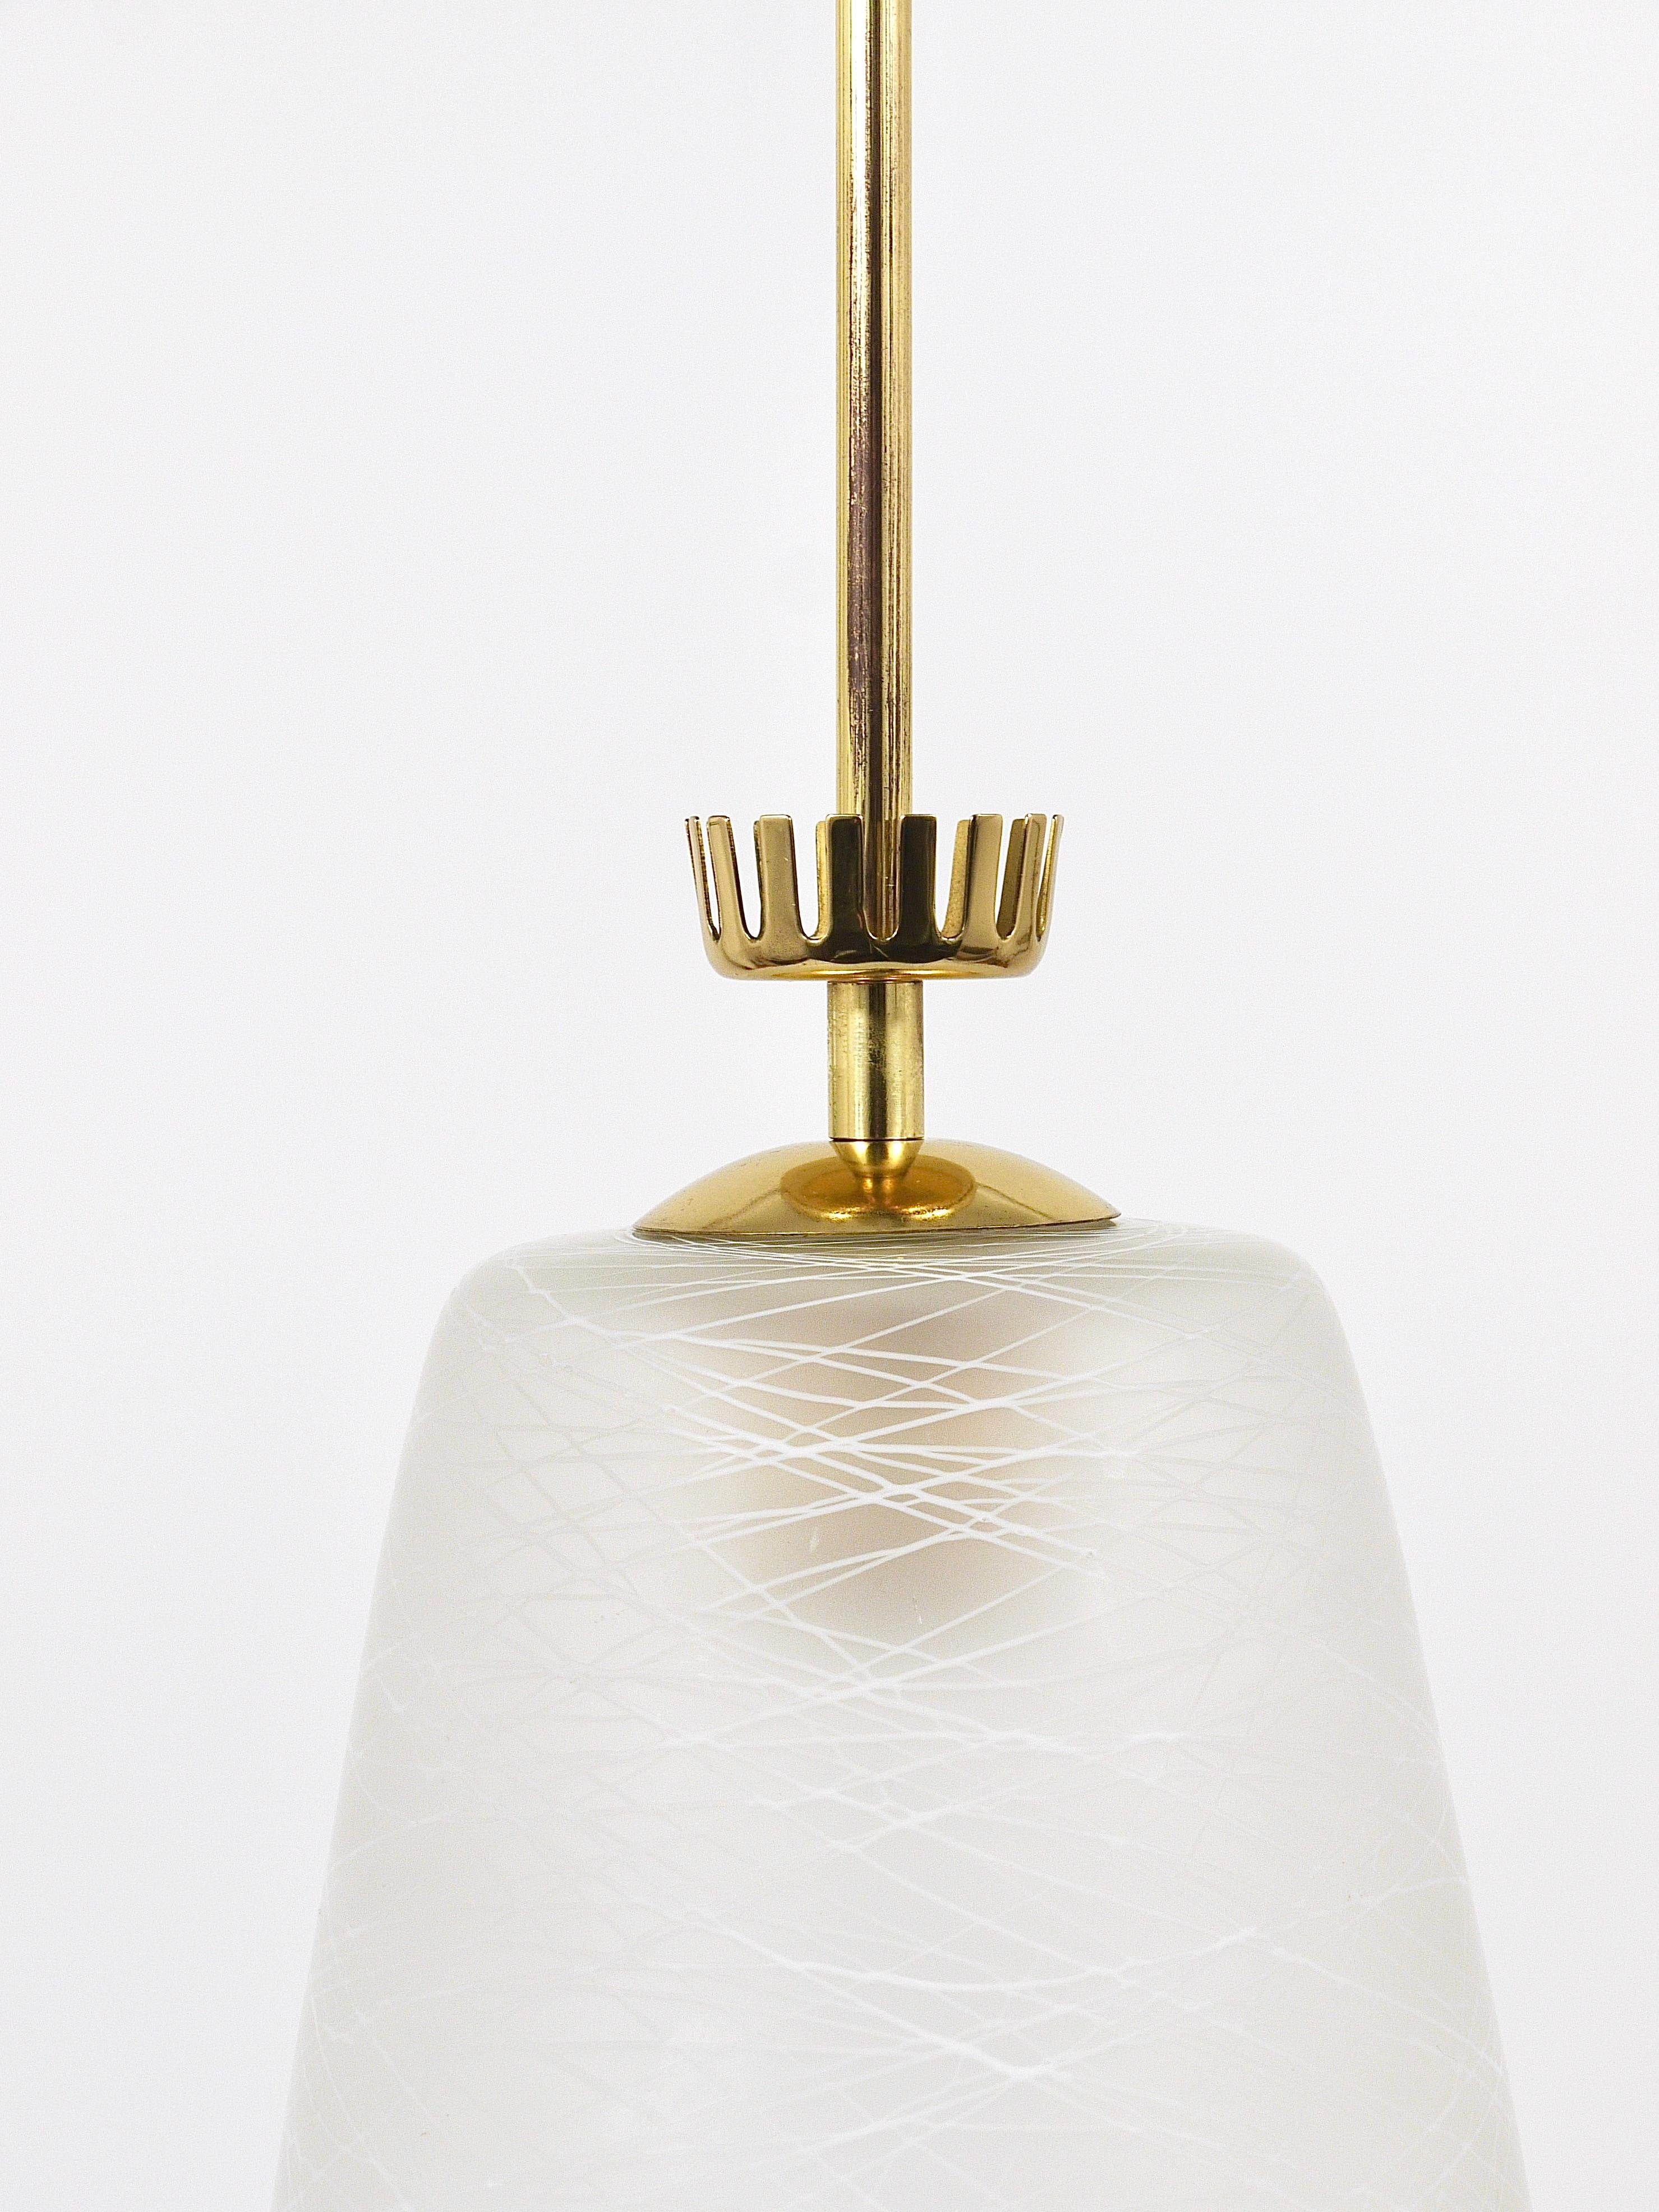 Gio Ponti Style Mid-Century Brass Crown Pendant Lamp Lantern, Italy, 1950s For Sale 1